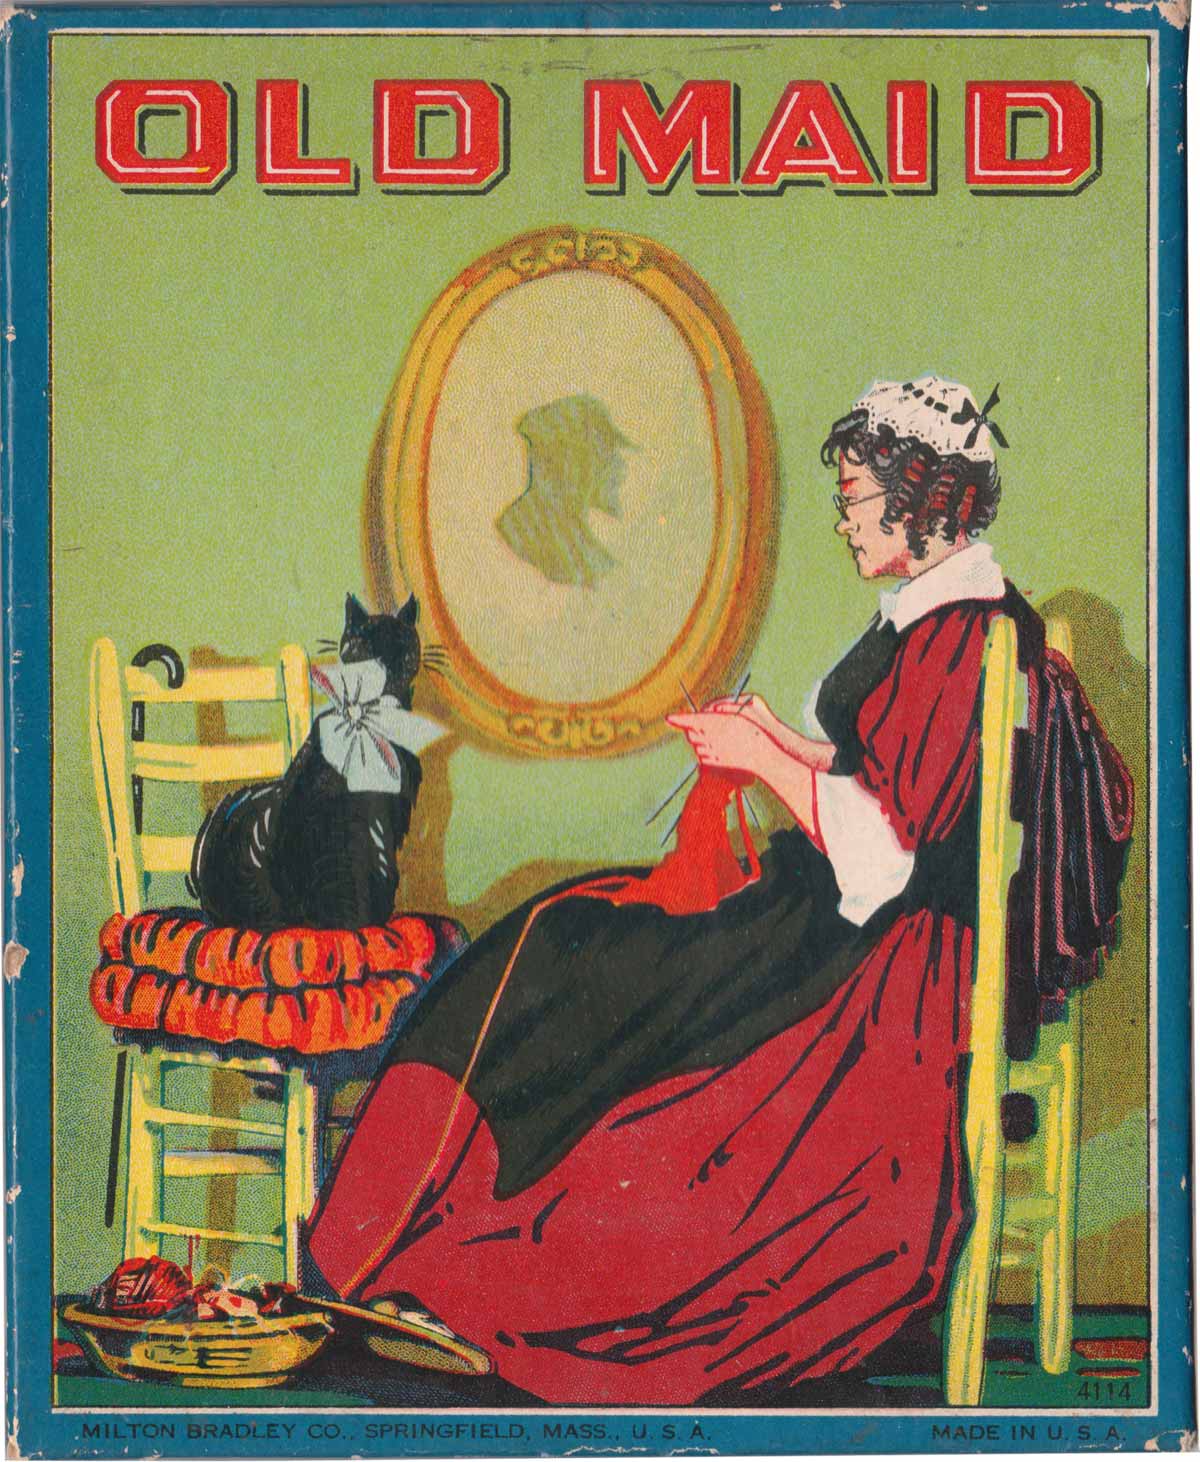 Milton Bradley ‘Old Maid’ card game, c.1920s